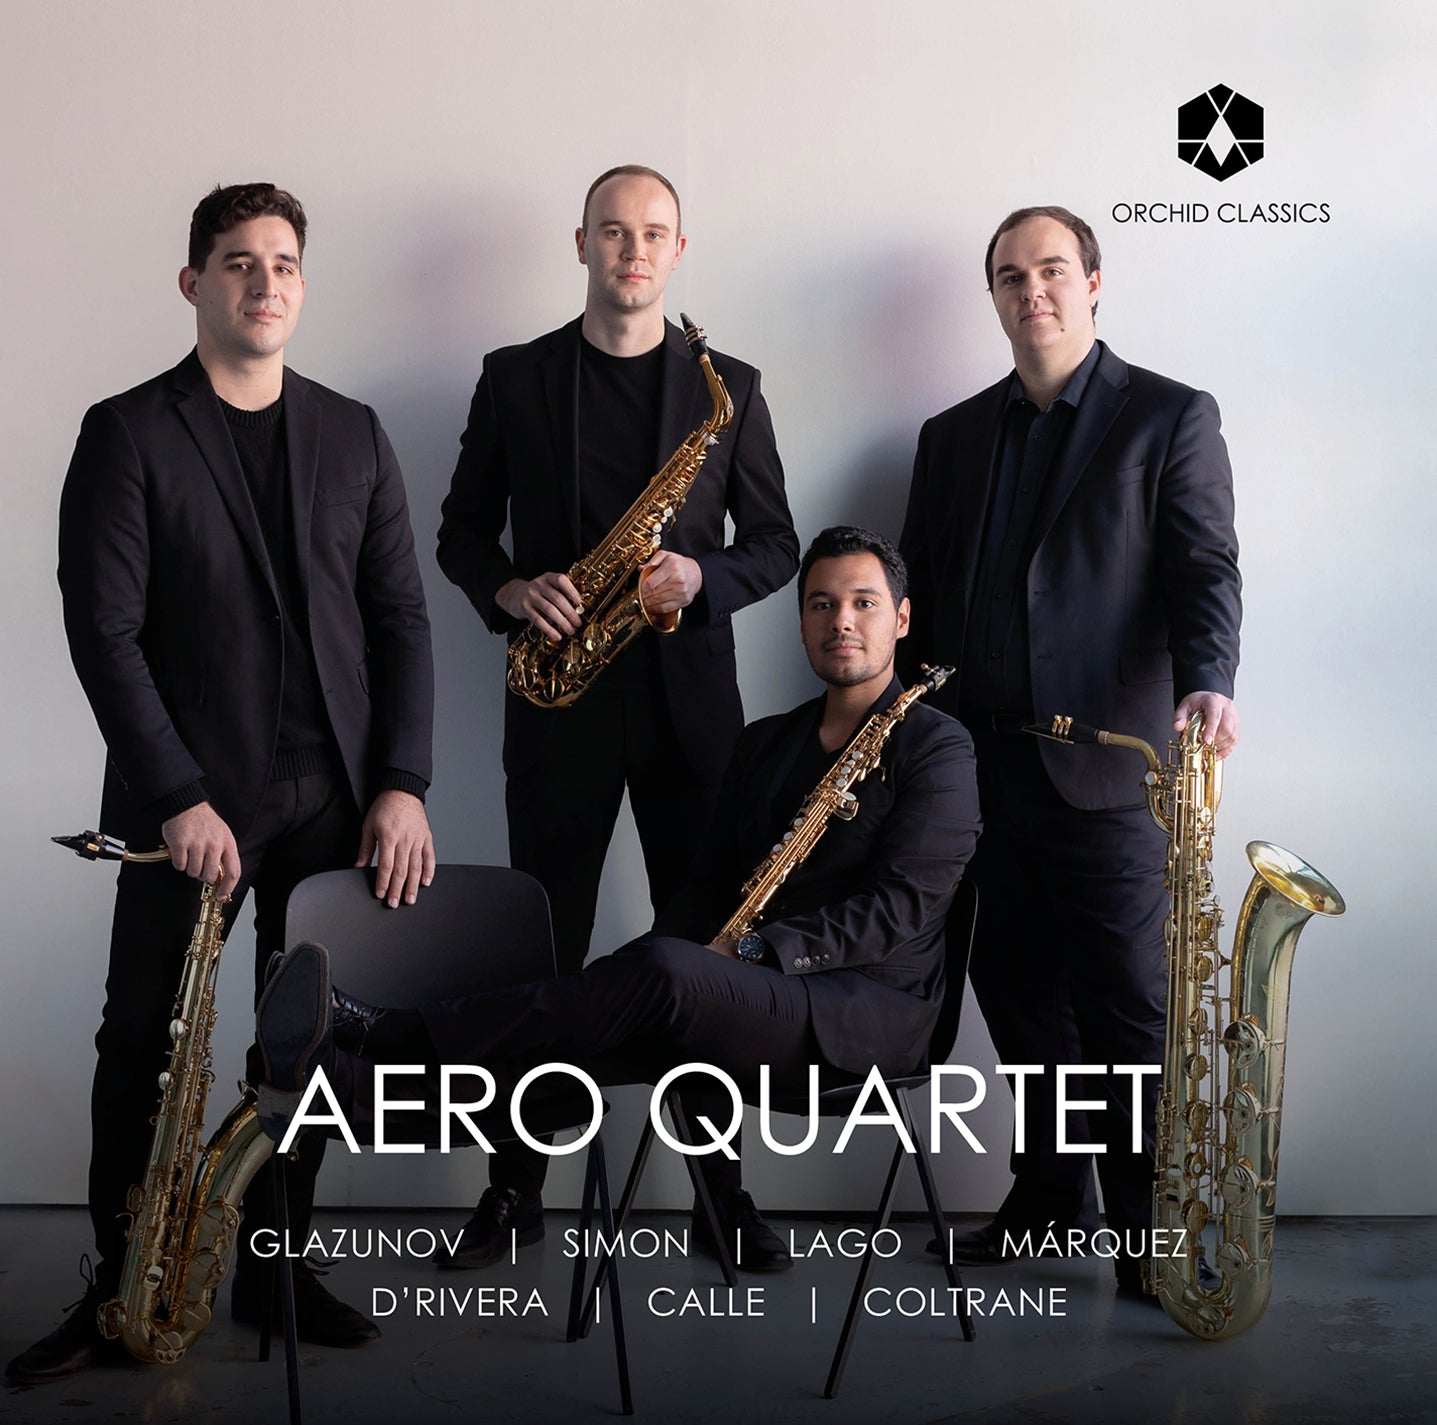 Aero Quartet - Saxophone Music from Glazunov to Marquéz